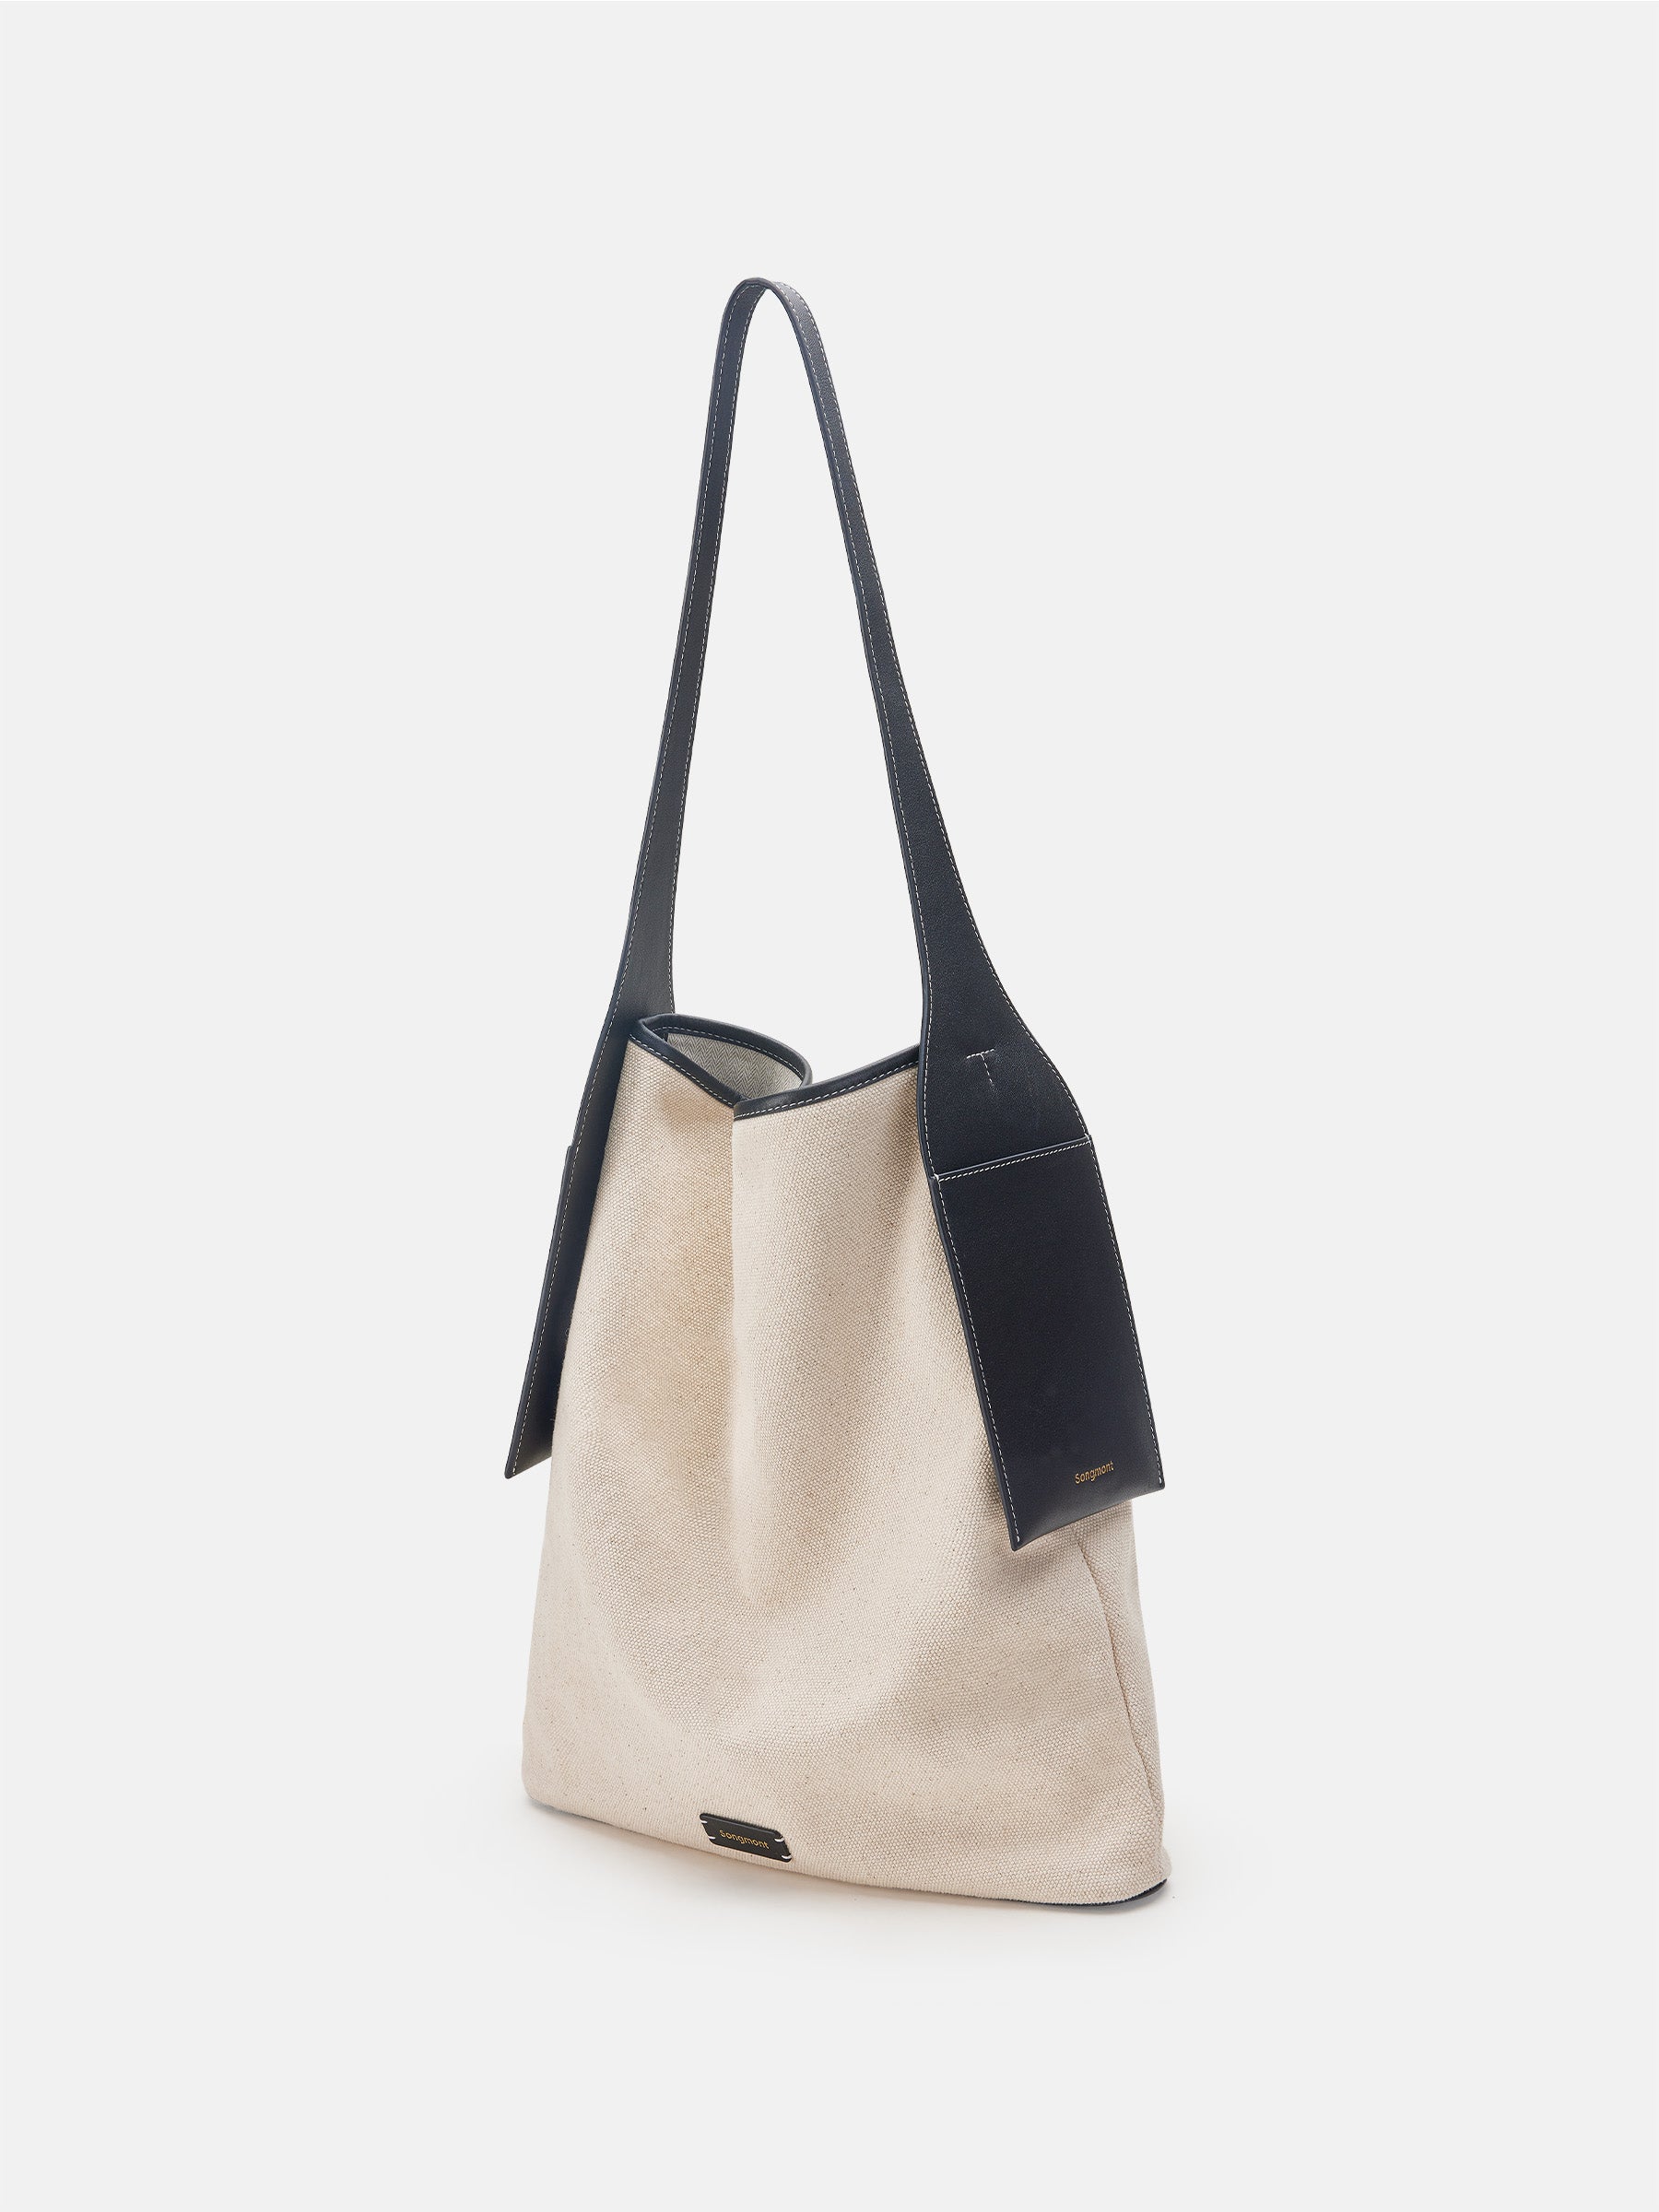 Contrast vintage embossed check versatile large capacity shopping tote bag  stylish simple ladies one-shoulder tote bag